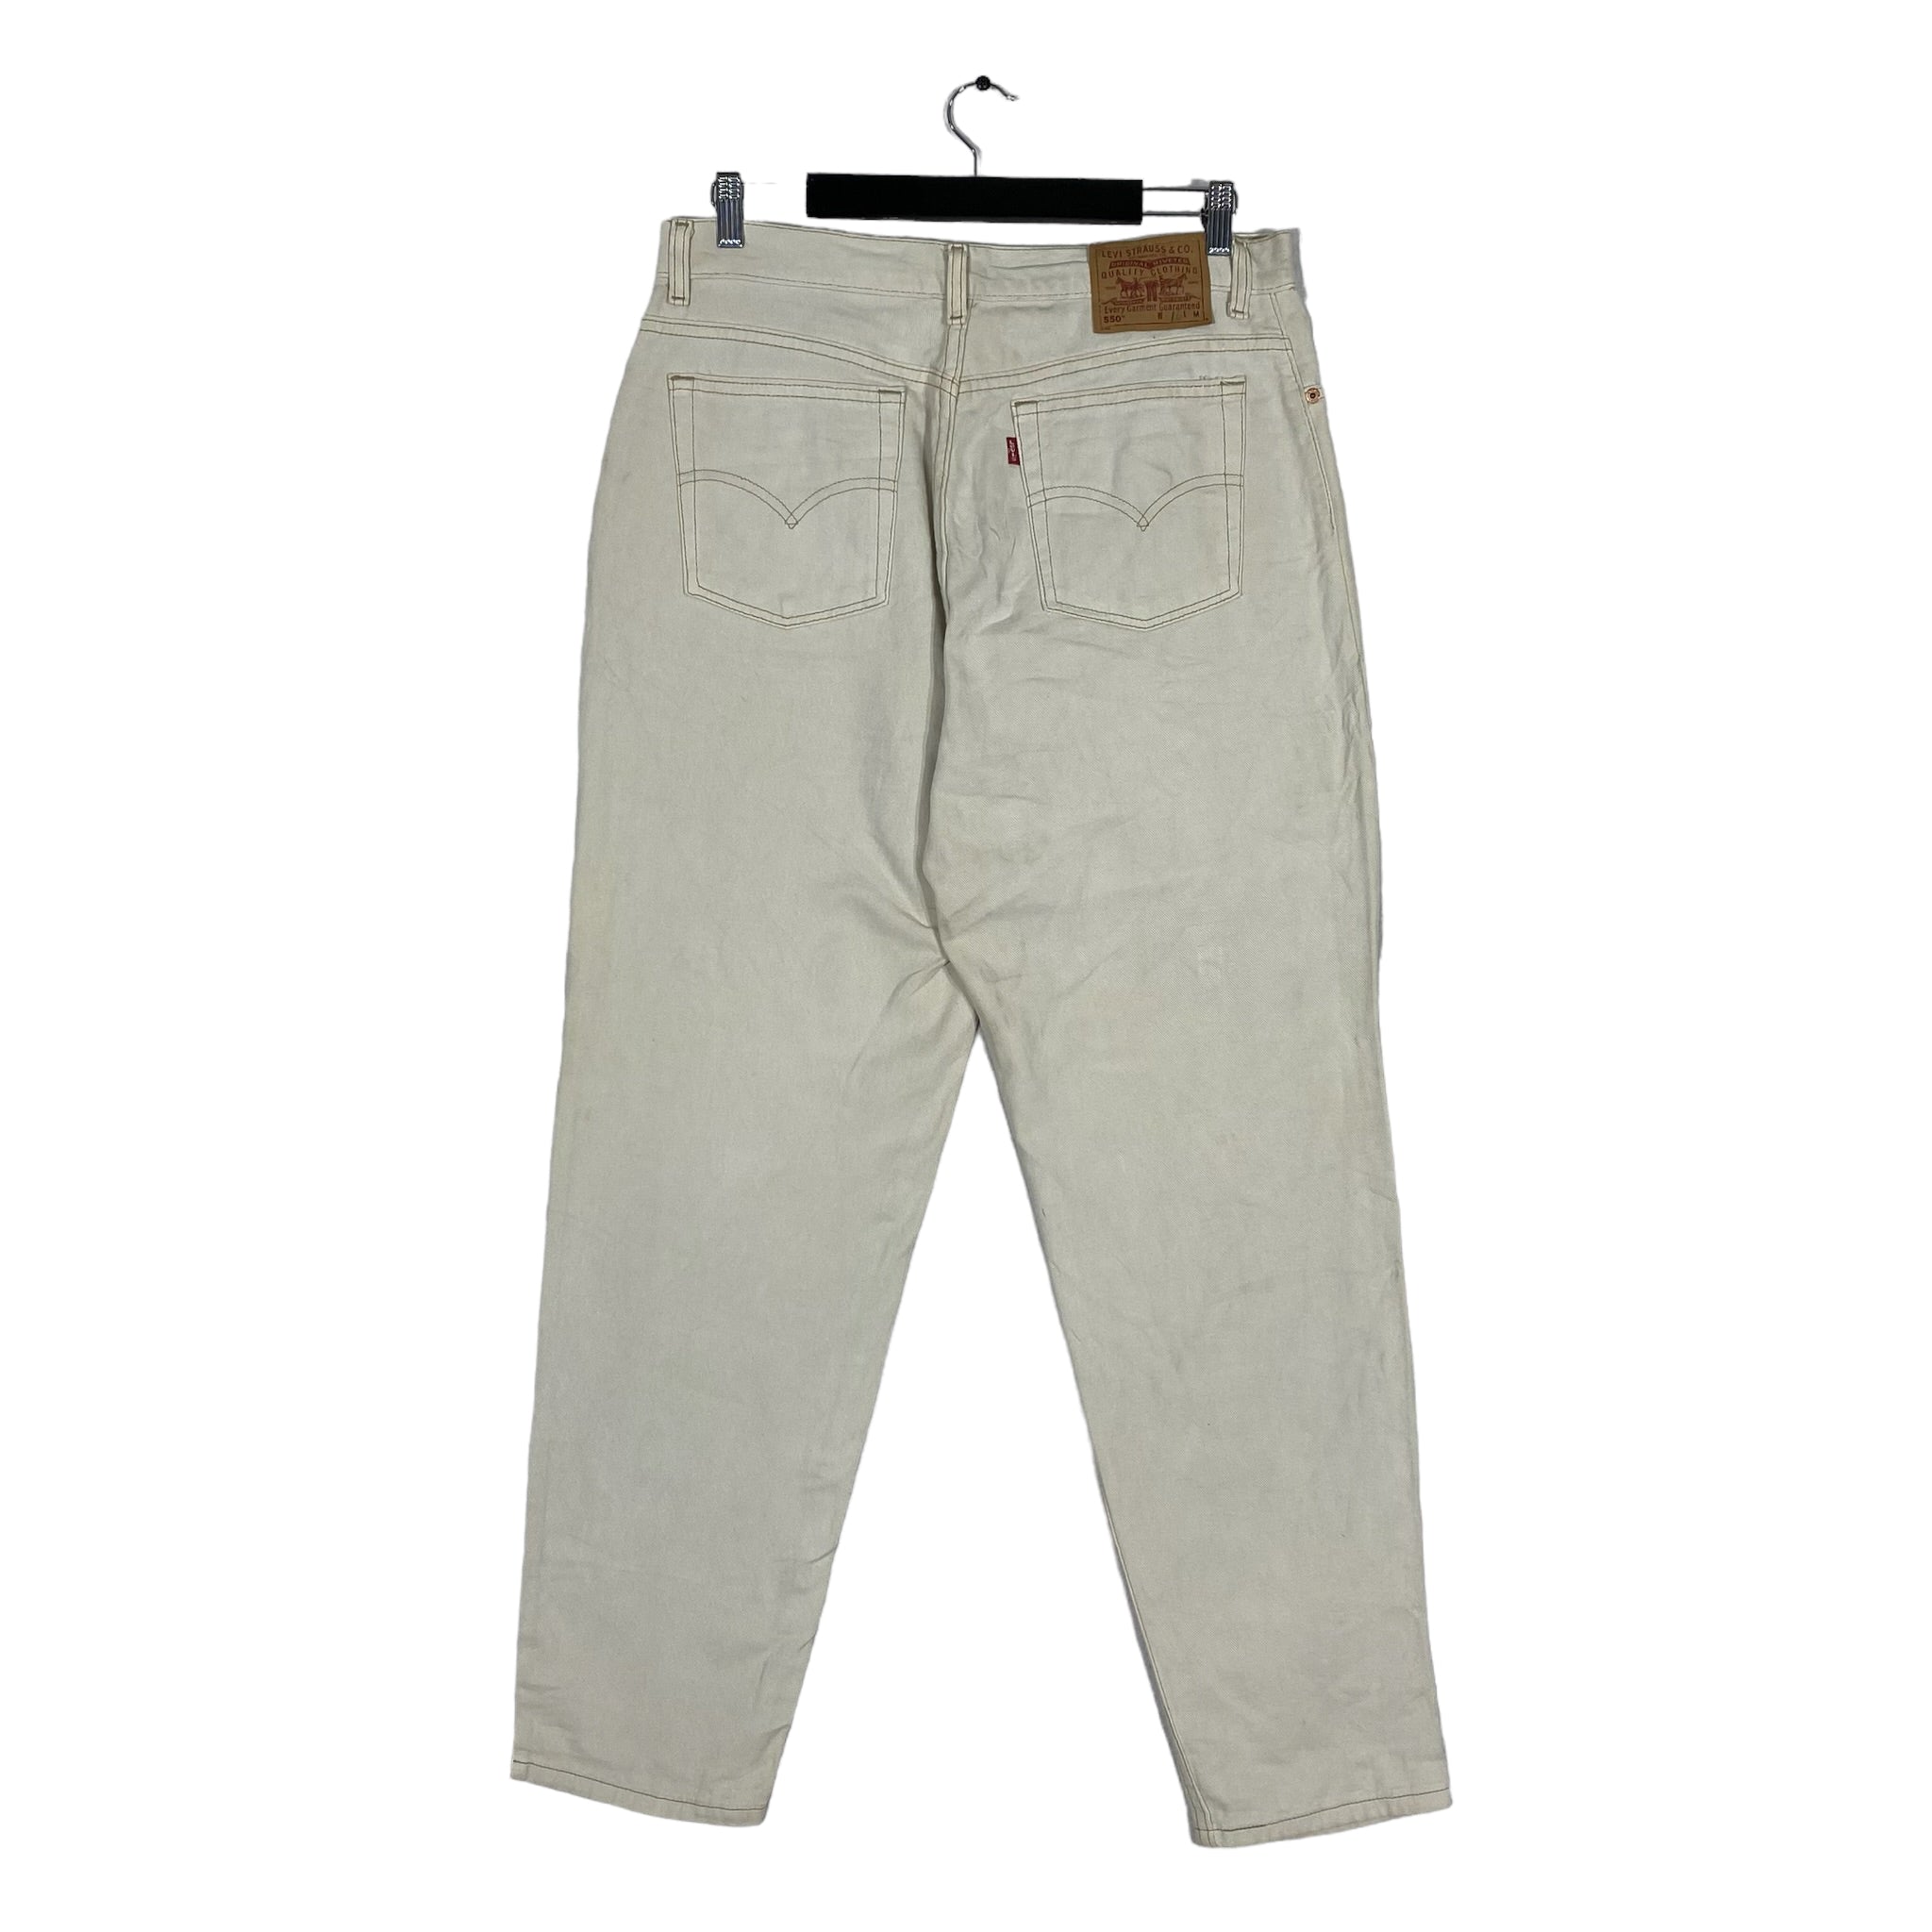 Vintage Levi's 550 Distressed Denim Jeans